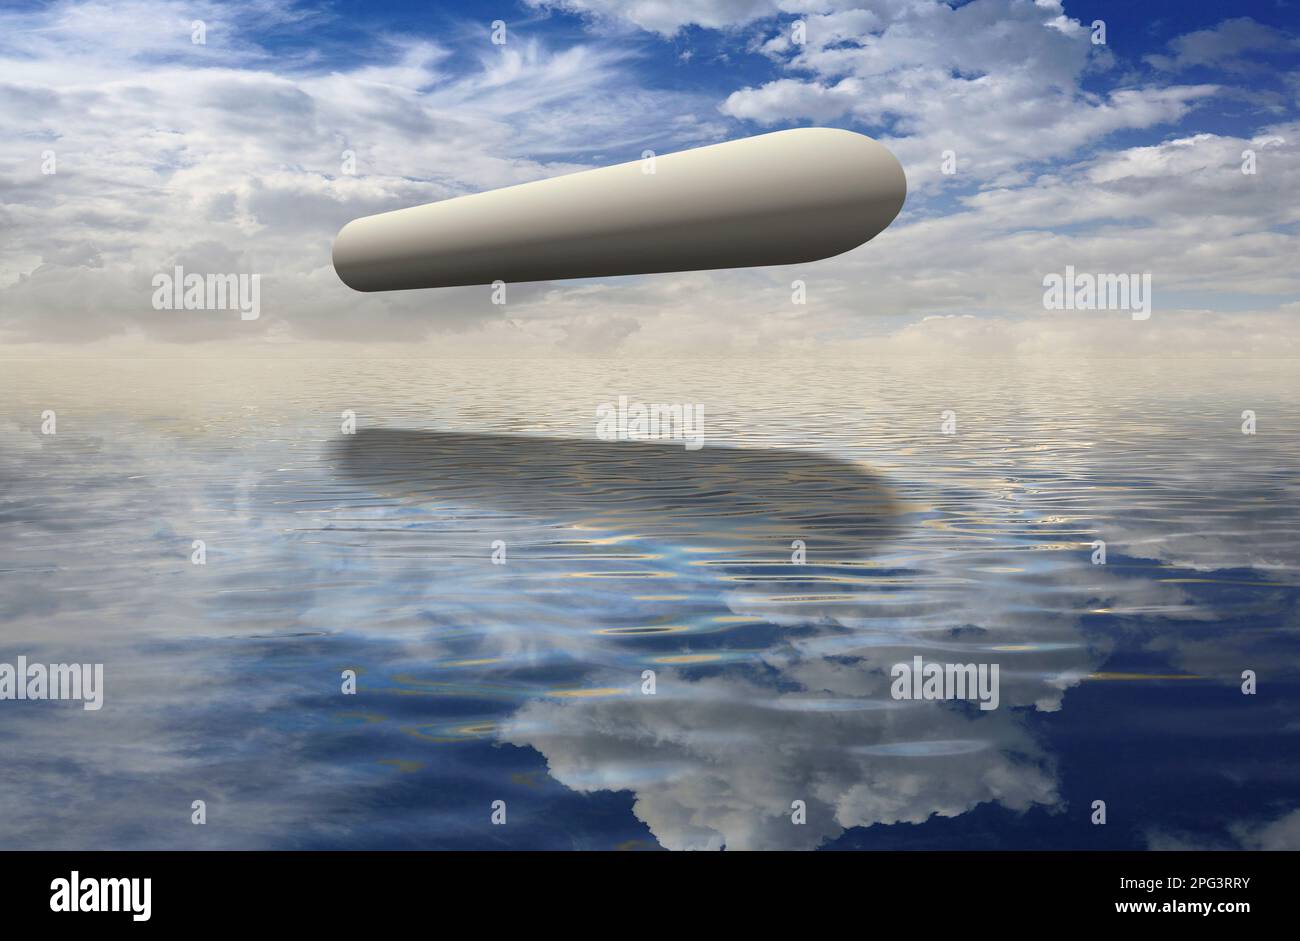 'Cigar' or 'Tic-Tac' UFO-UAP sighting (Digital Illustration Stock Photo ...